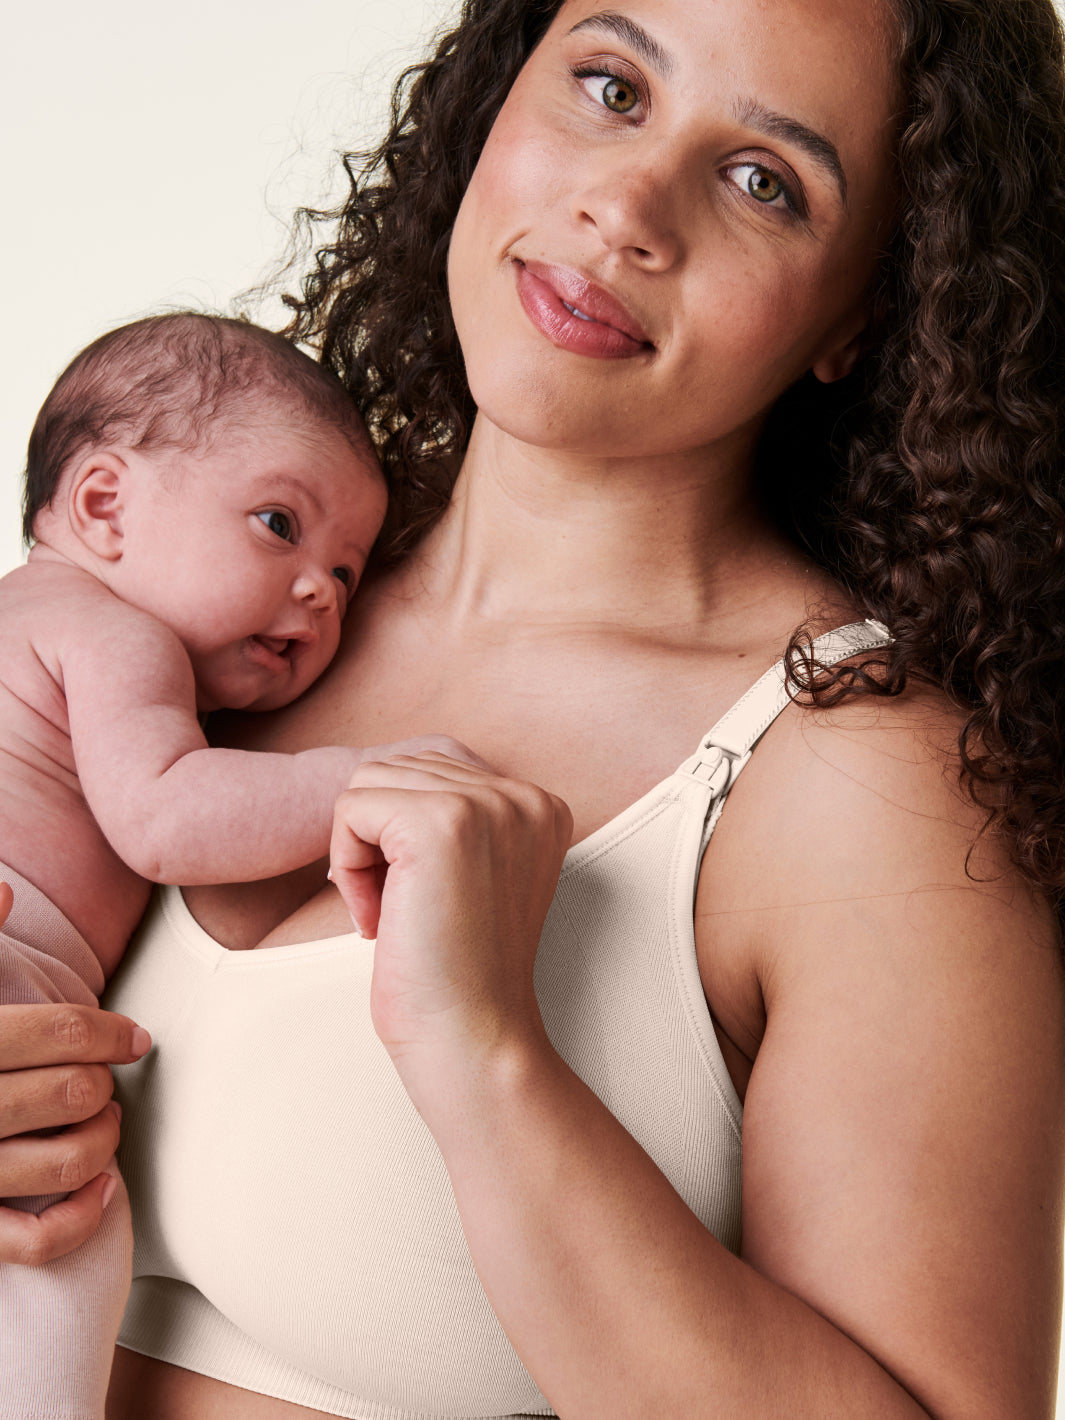 Bravado Designs Body Silk Seamless Nursing Bra, White, X-Large : :  Baby Products